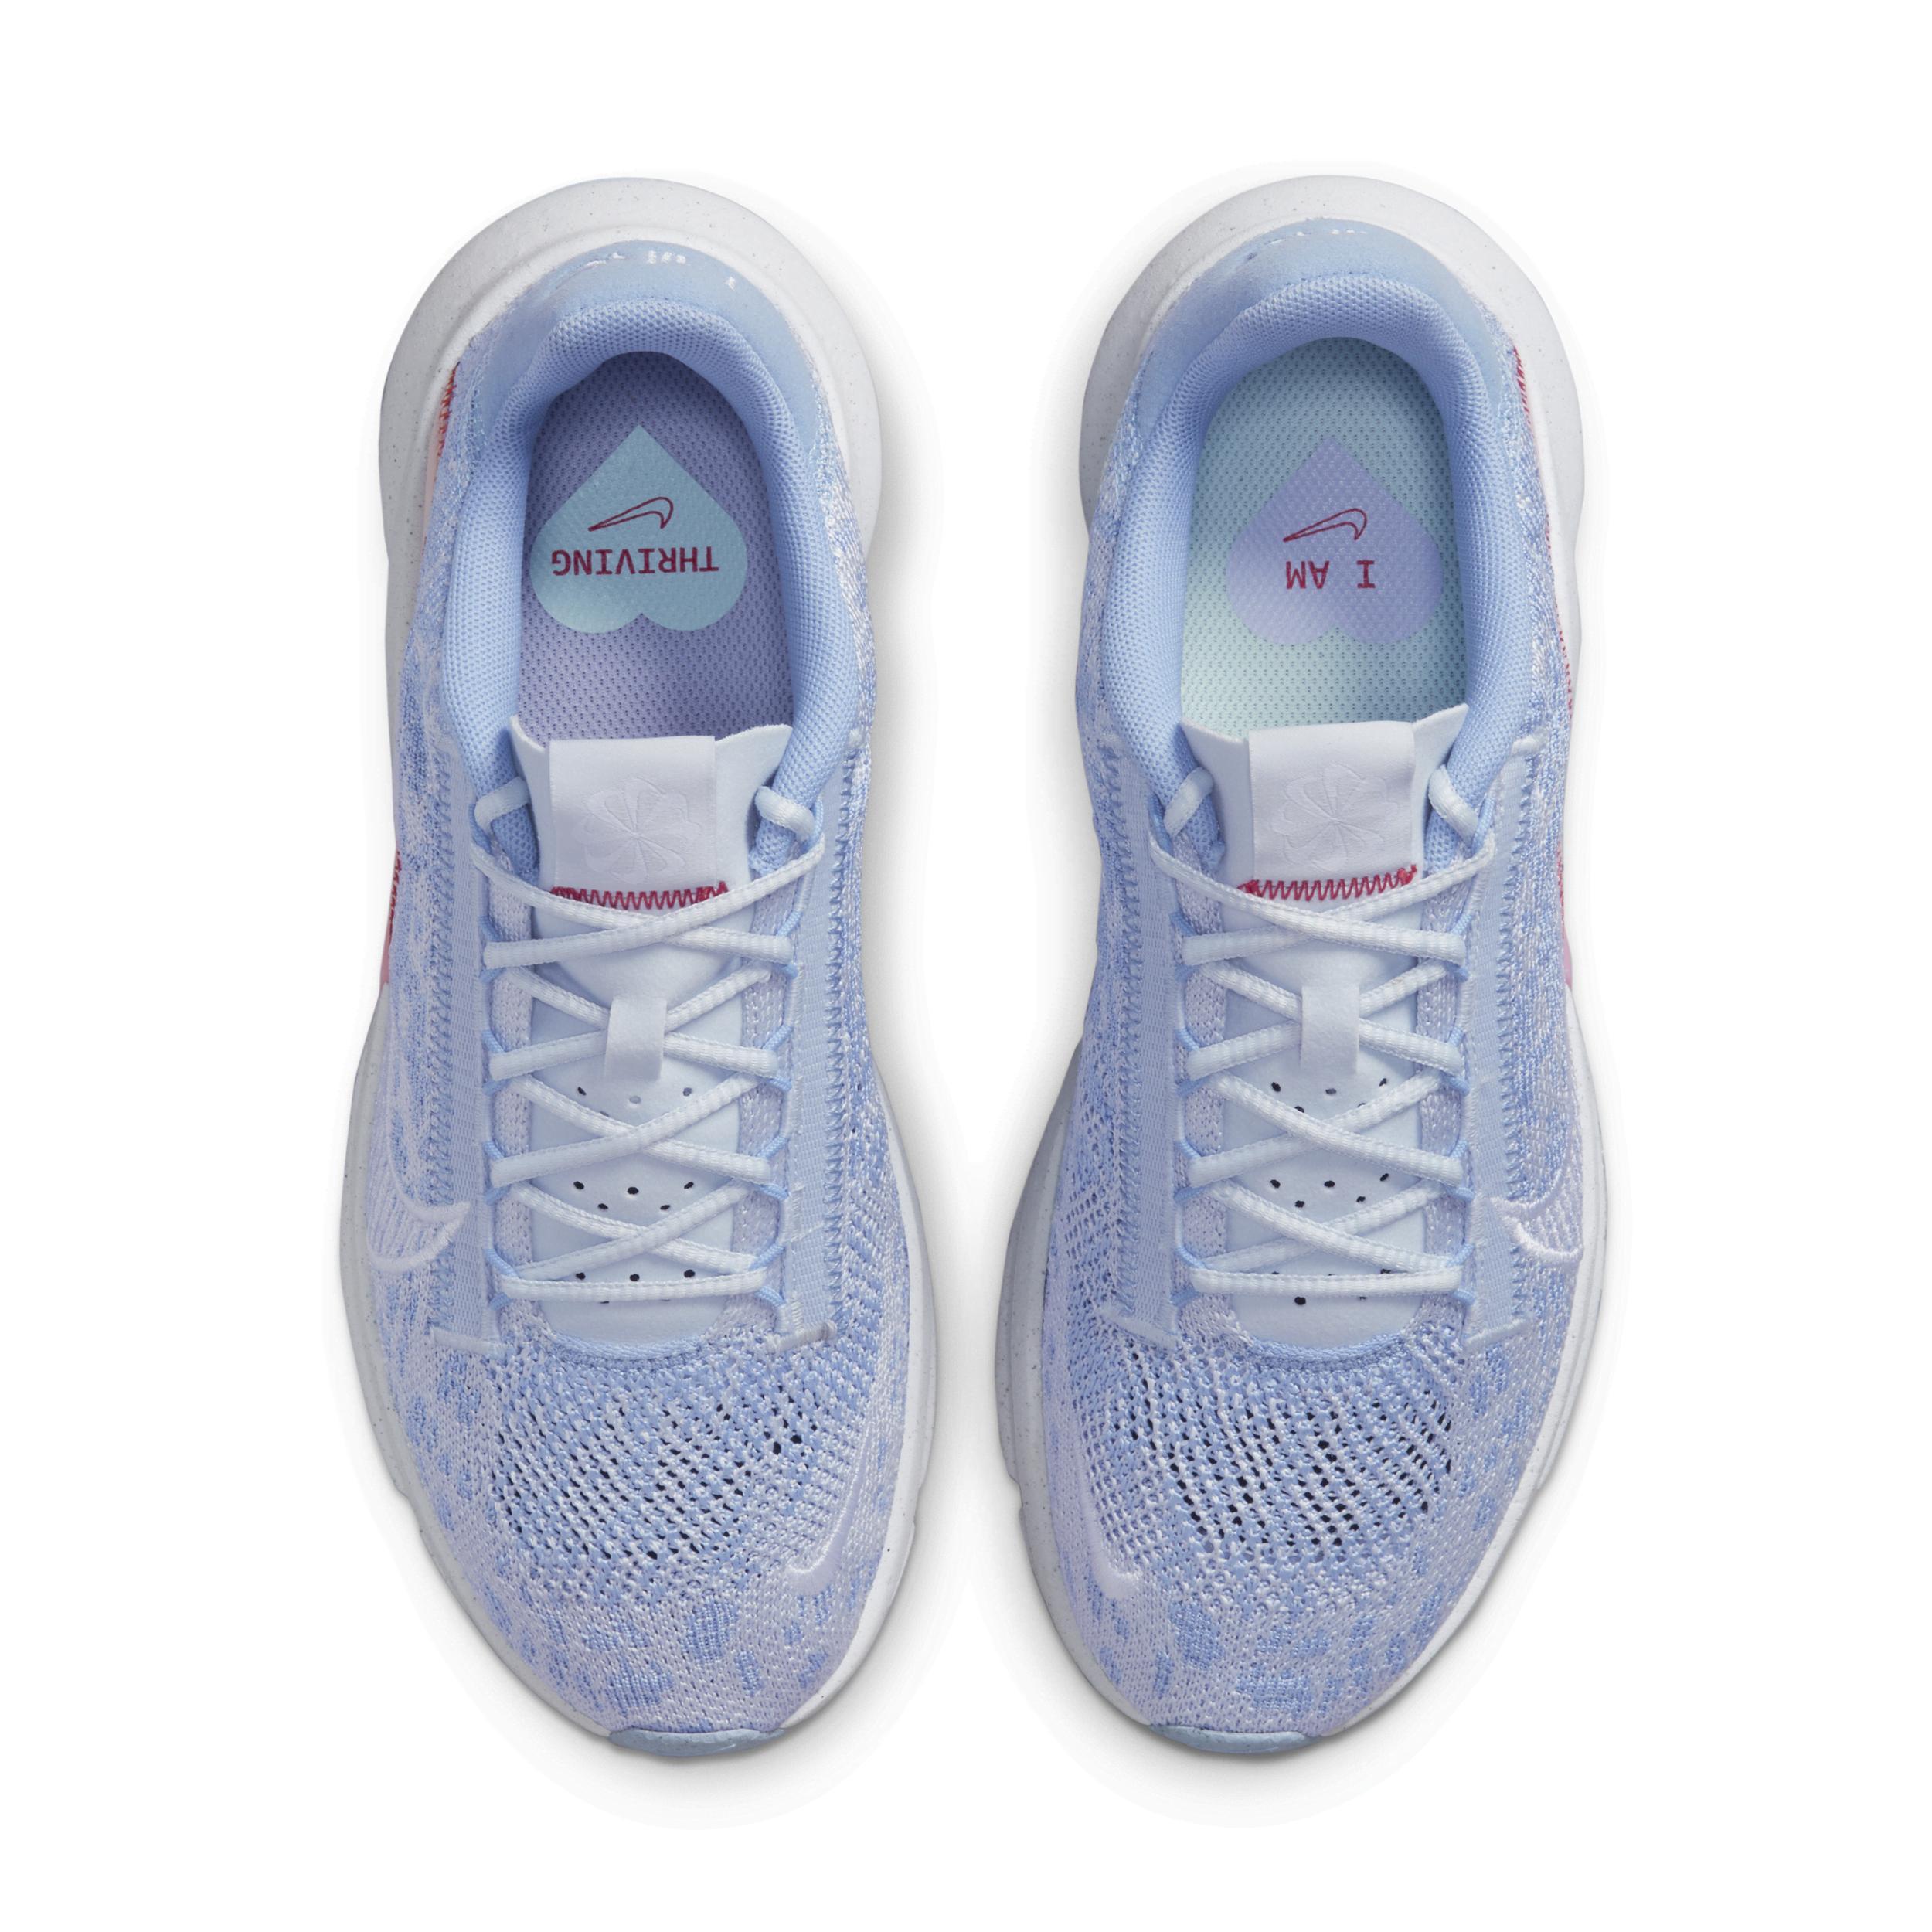 Nike Superrep Go 3 Flyknit Running Shoe Product Image